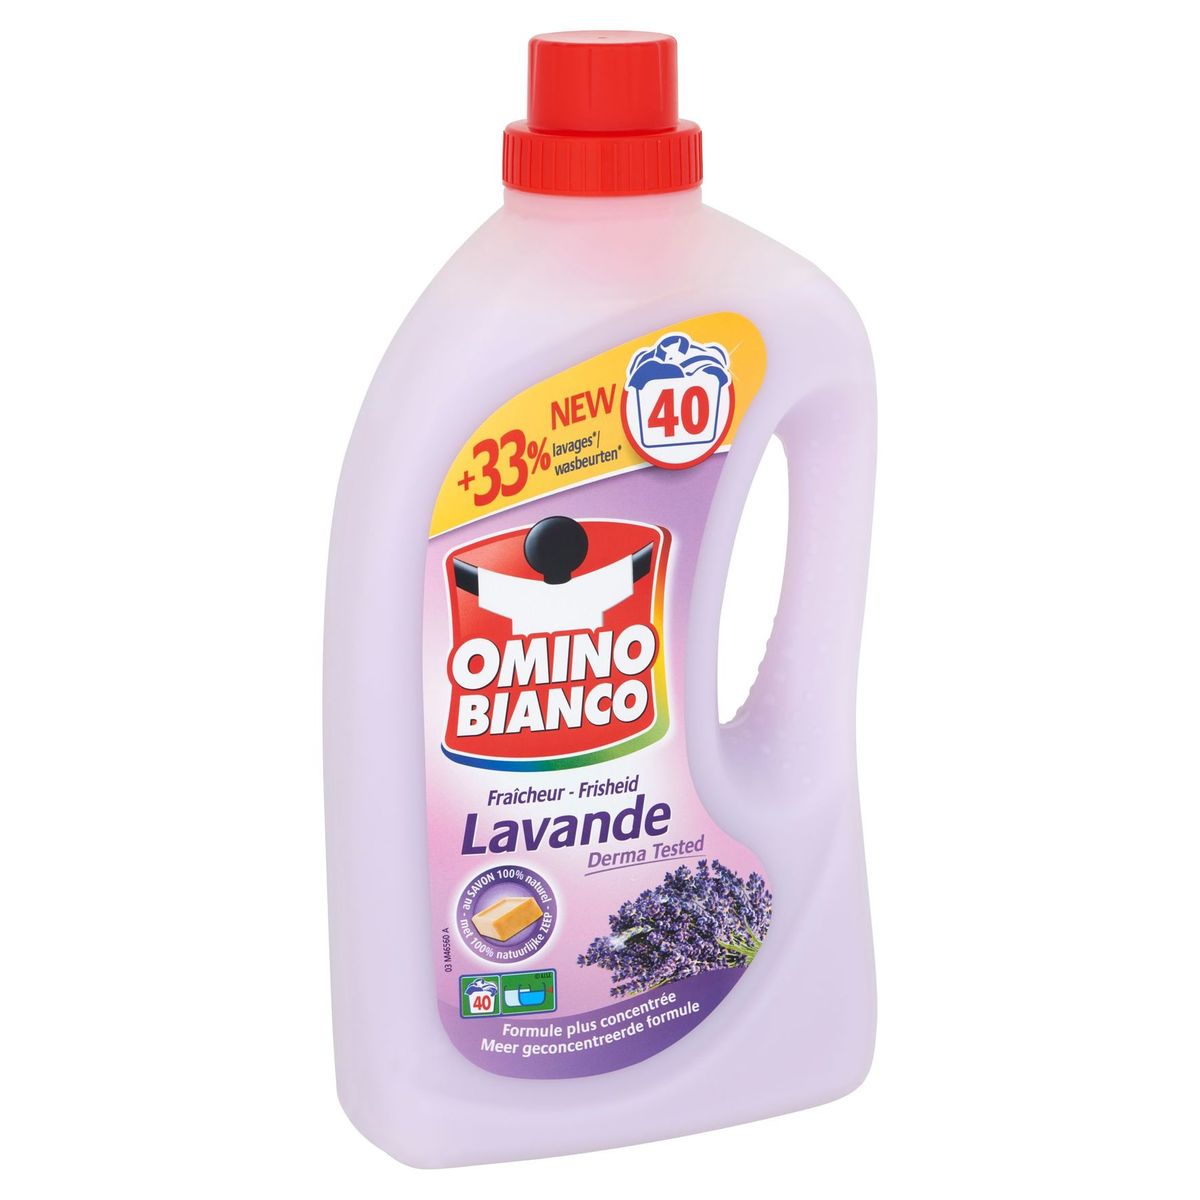 Omino Bianco Frisheid Lavande 40 Wasbeurten 2000 ml